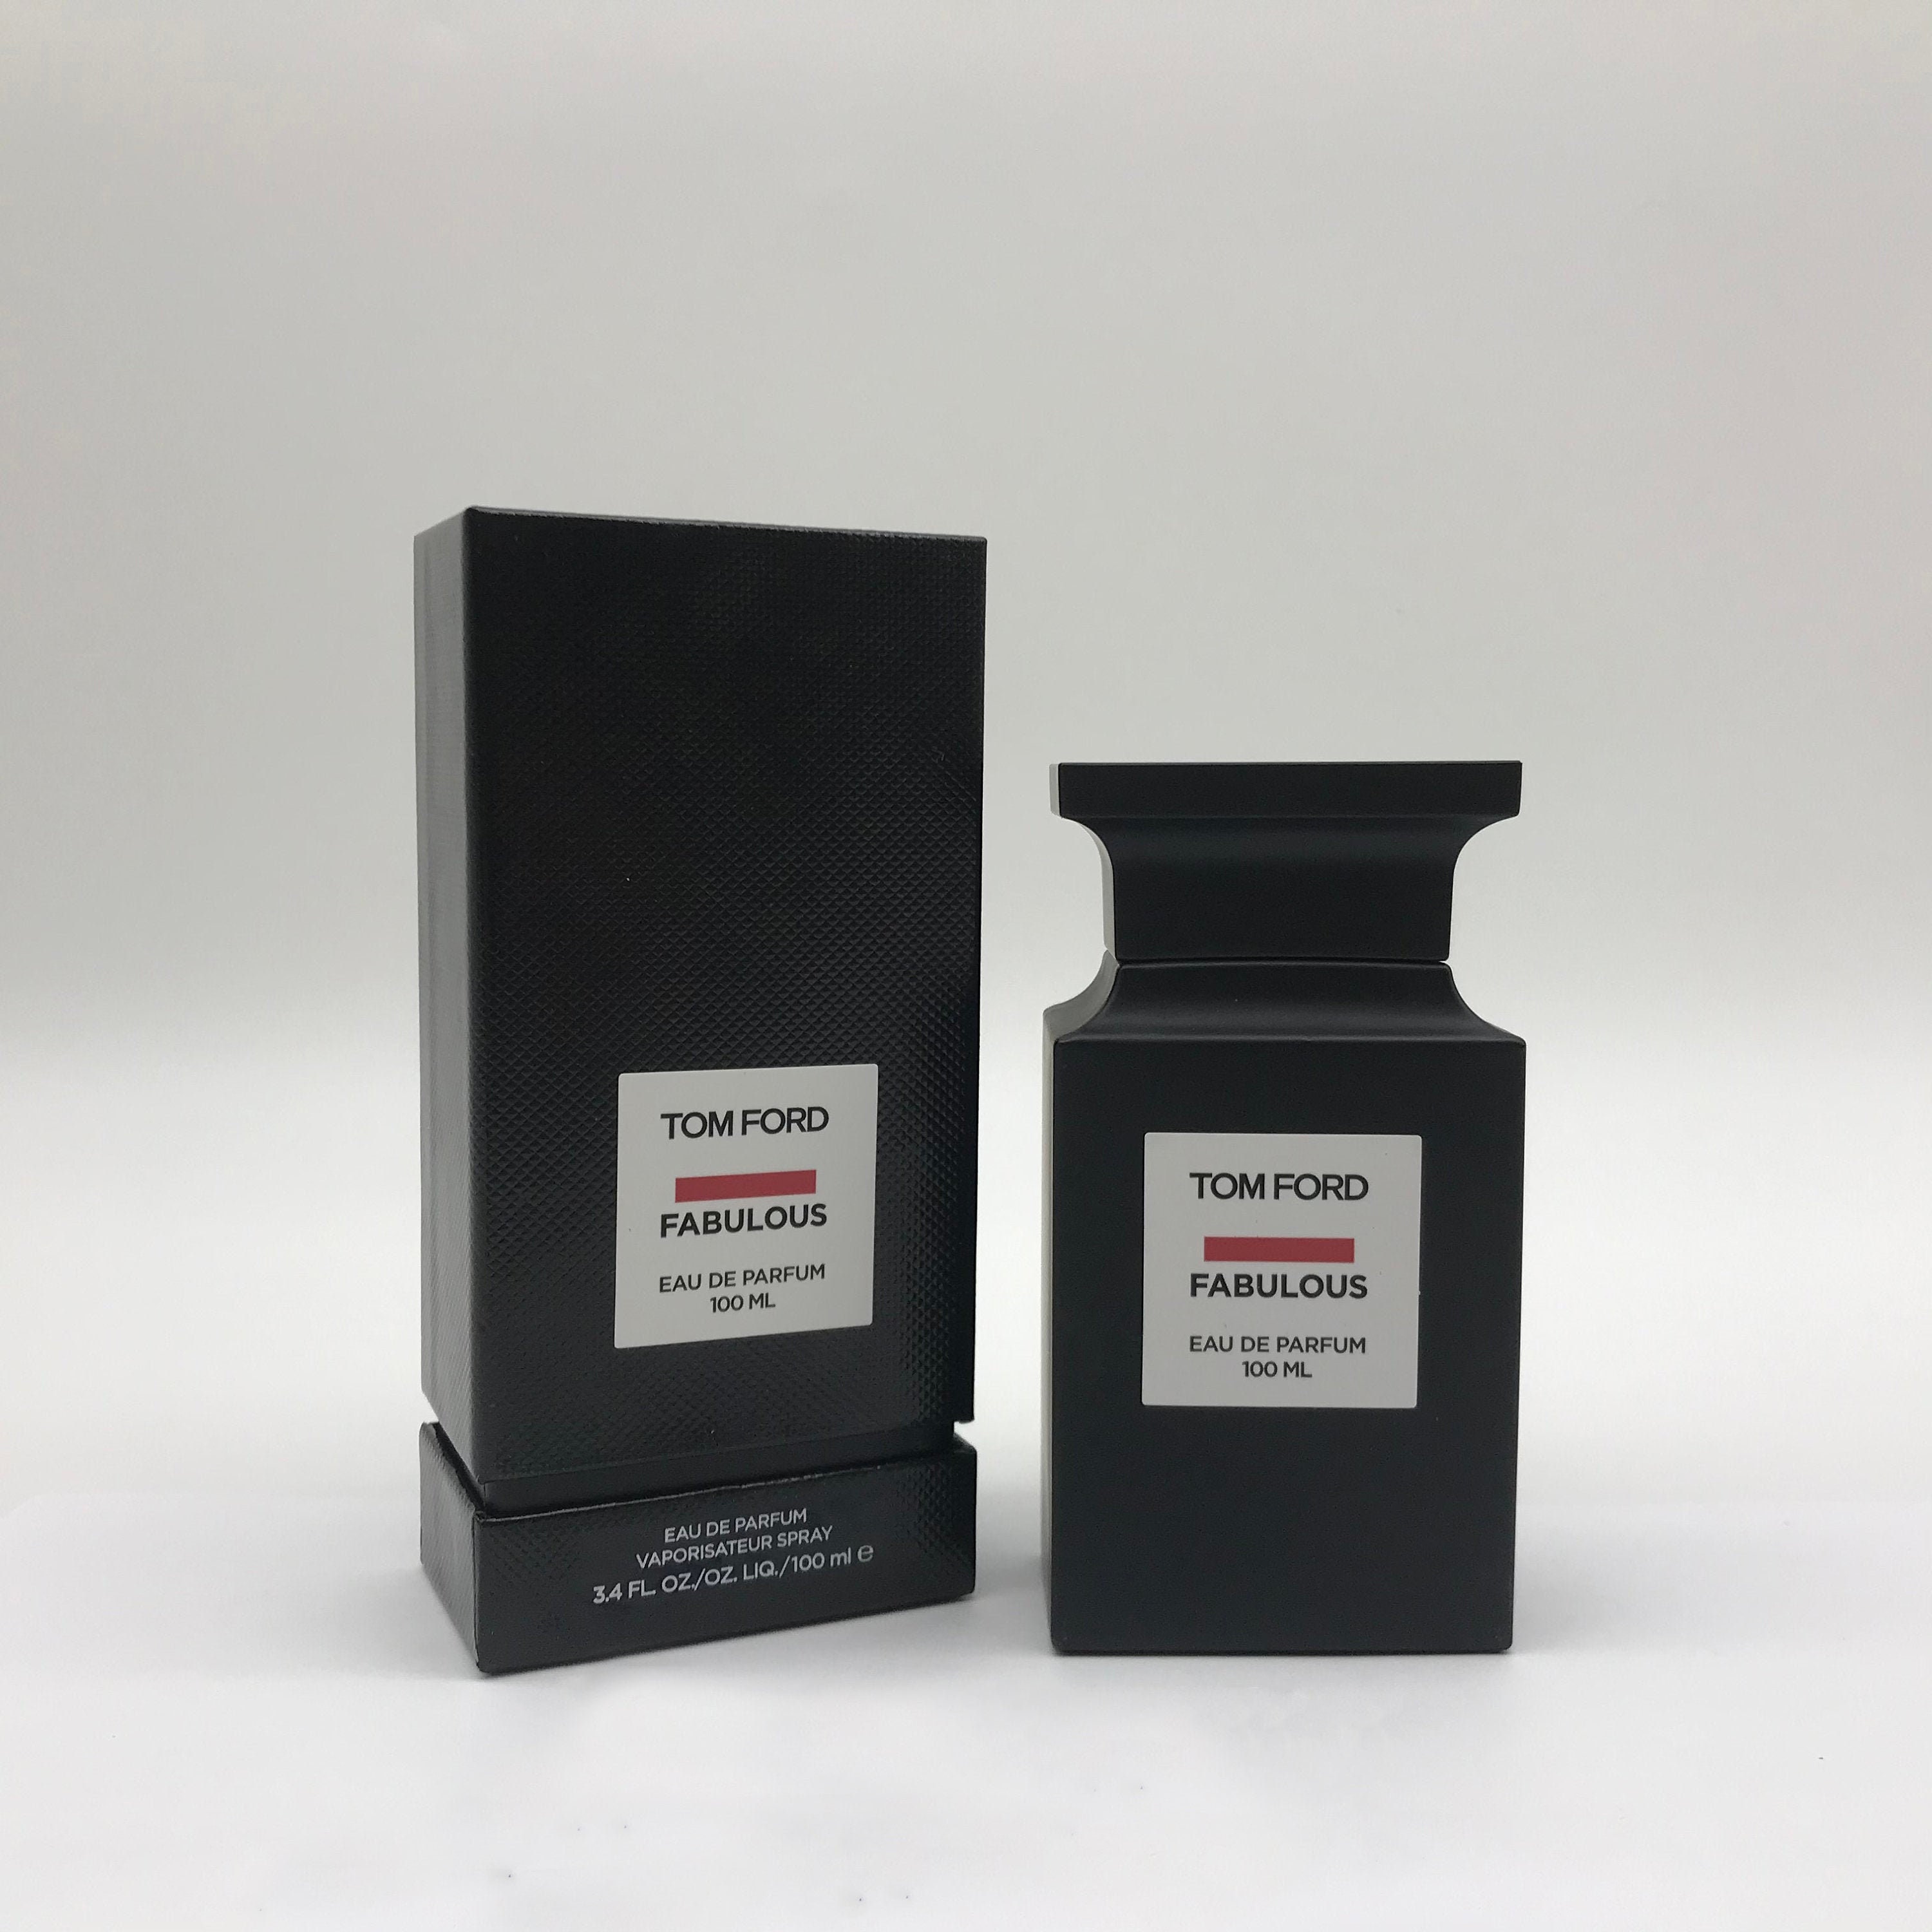 Tom Ford Fabulous Eau De Parfum 100 ml 3.4 oz / New in Box | Etsy